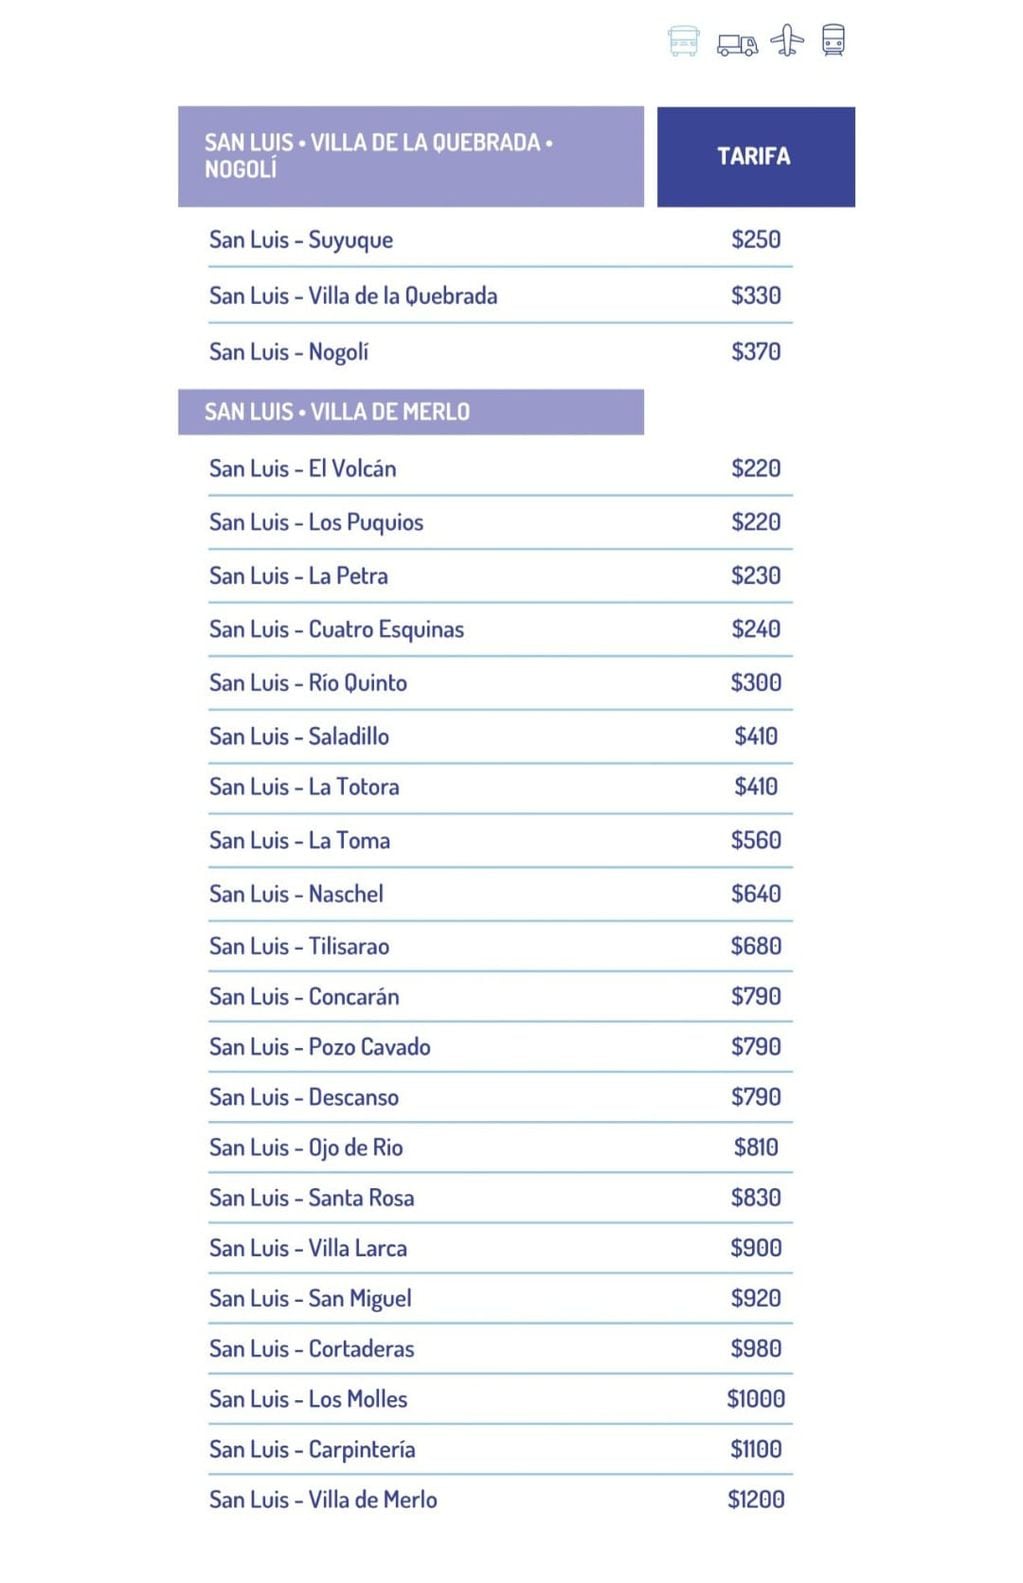 Transporte interurbano de San Luis: nuevas tarifas.